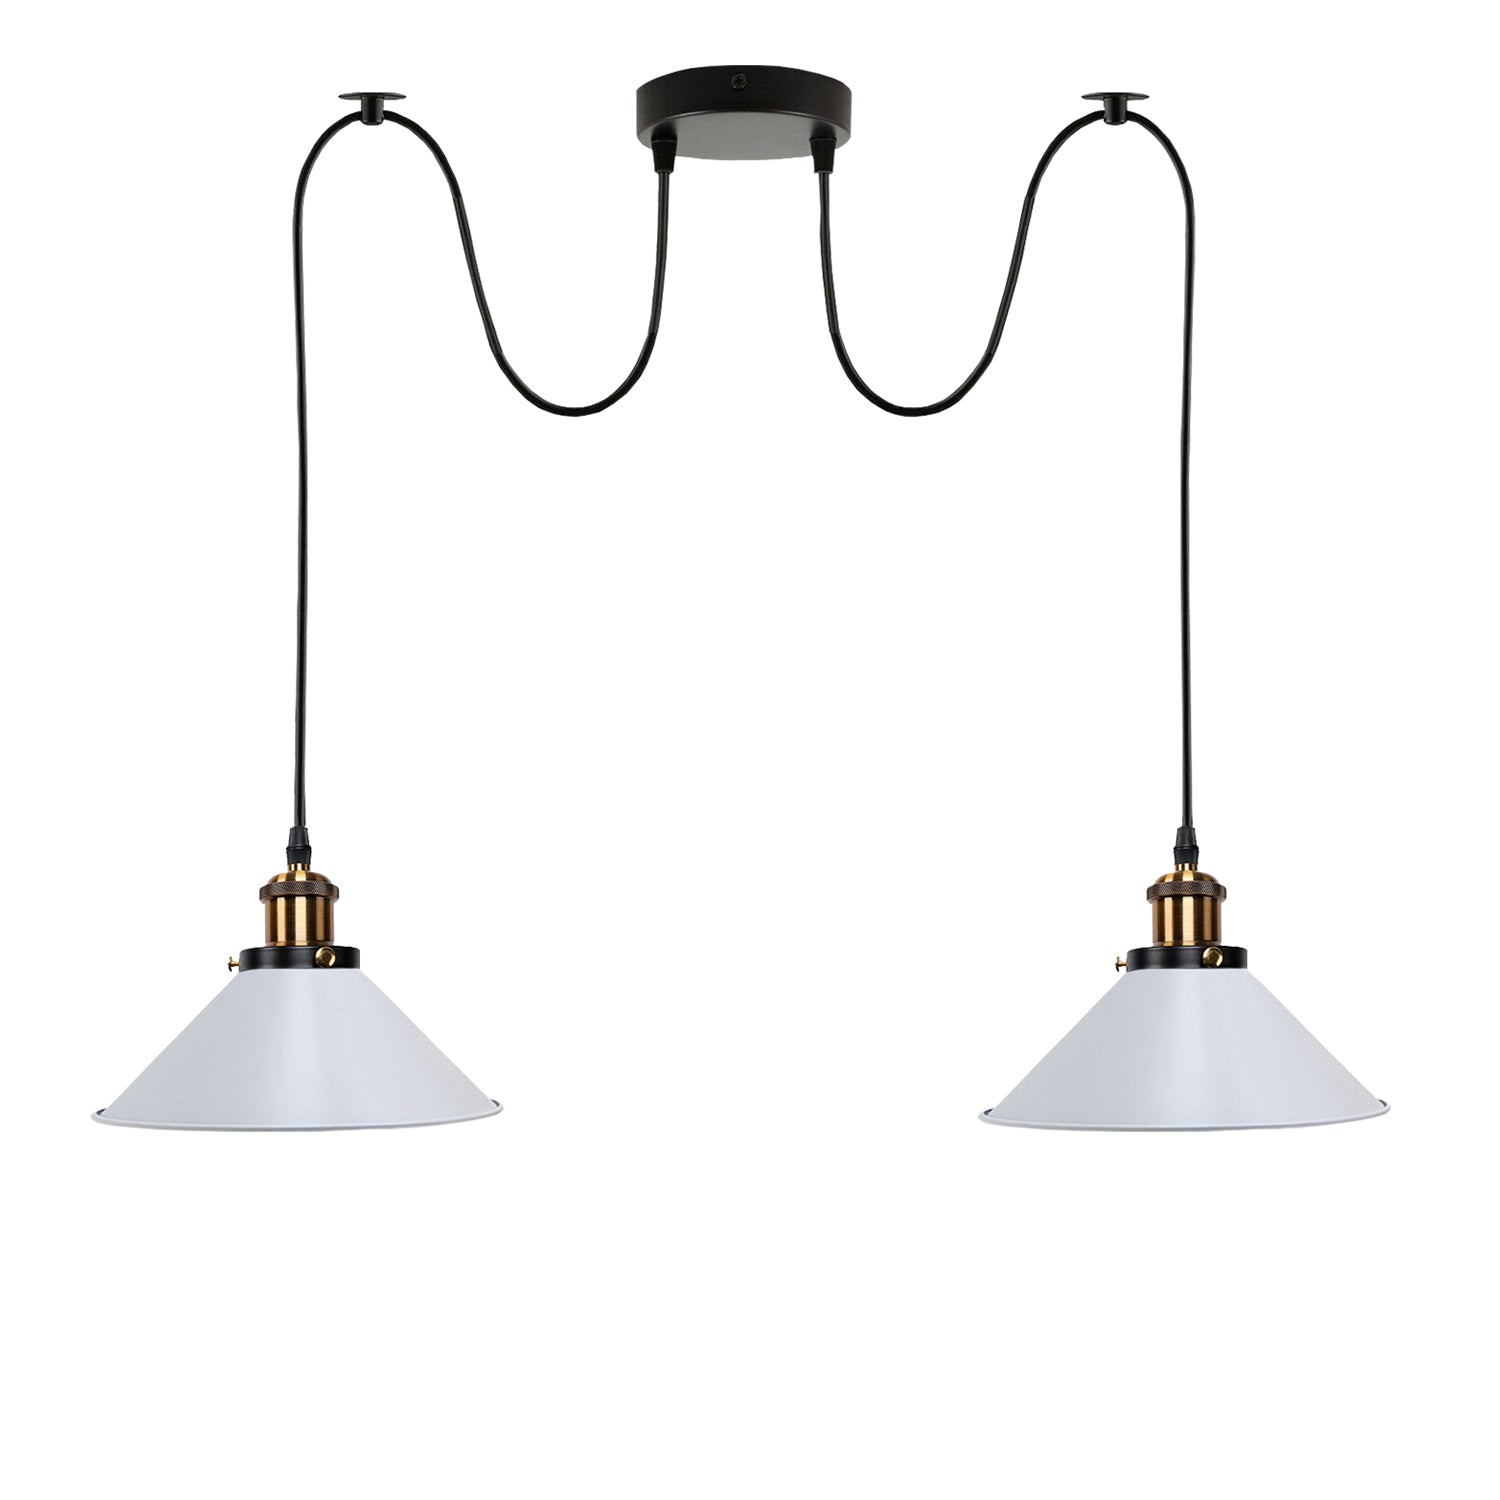 White 2 Way Retro Industrial Ceiling E27 Hanging Lamp Pendant Light~3498 - LEDSone UK Ltd